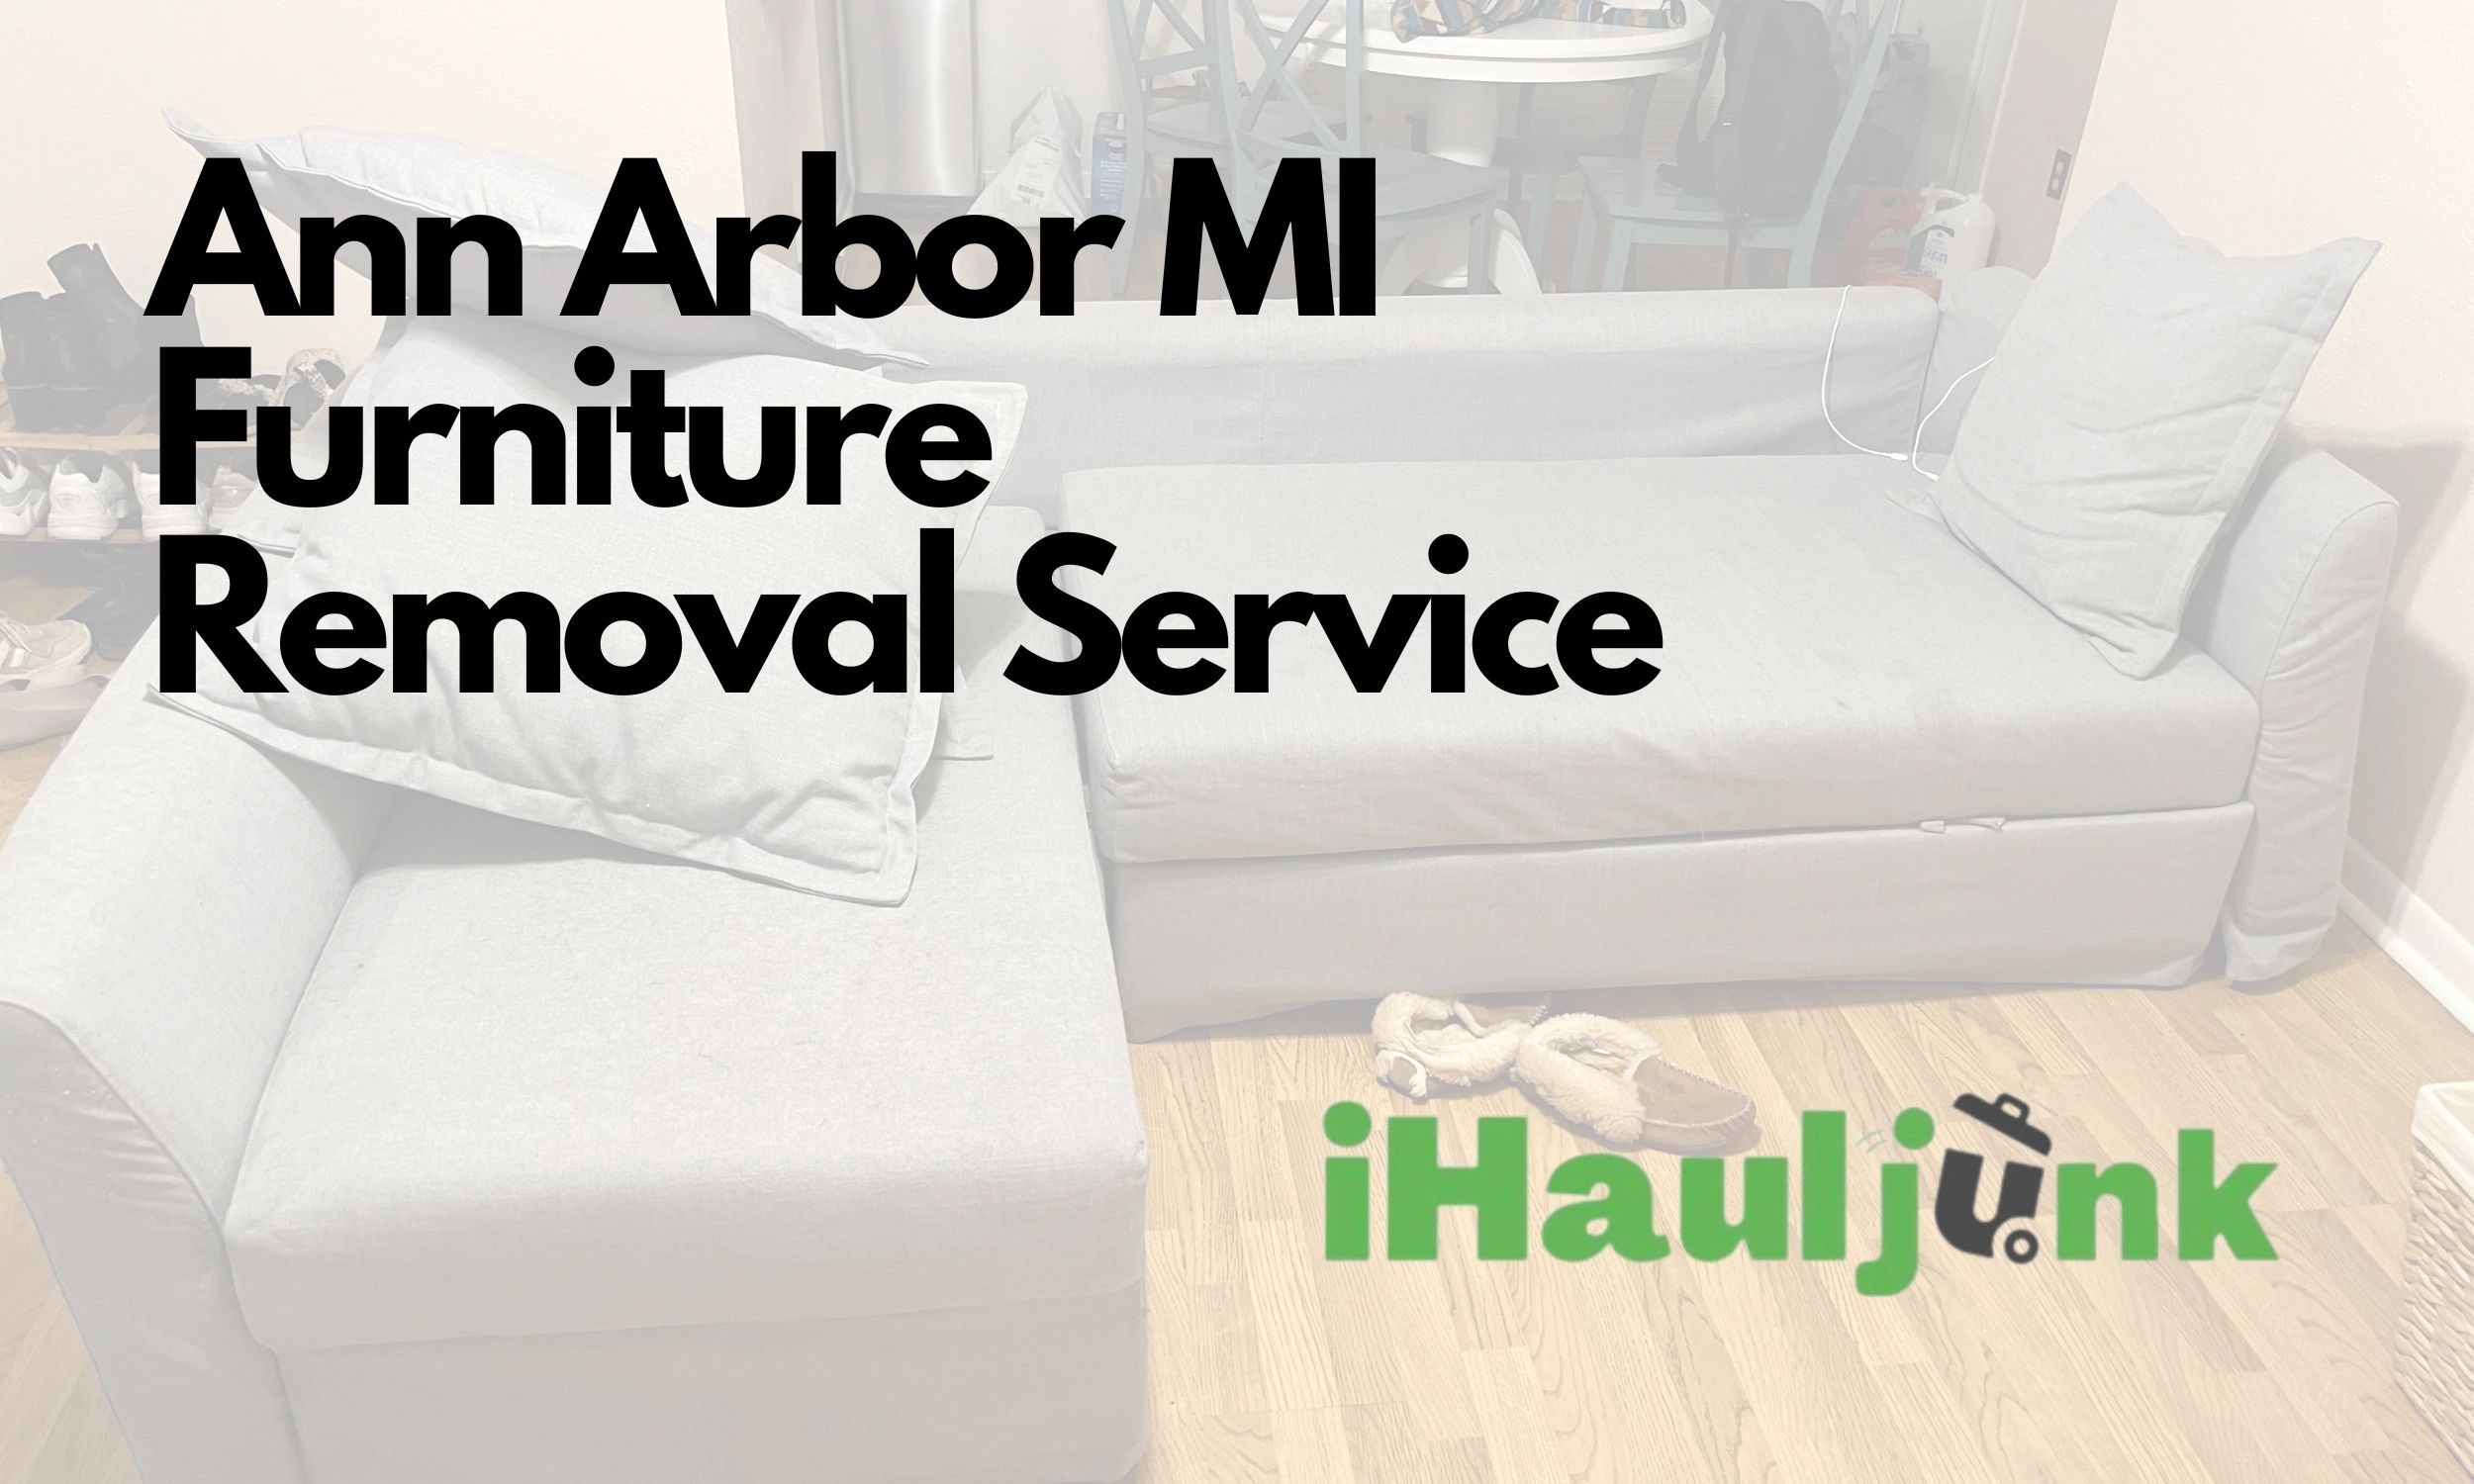 Furniture removal service iHaulJunk Ann Arbor